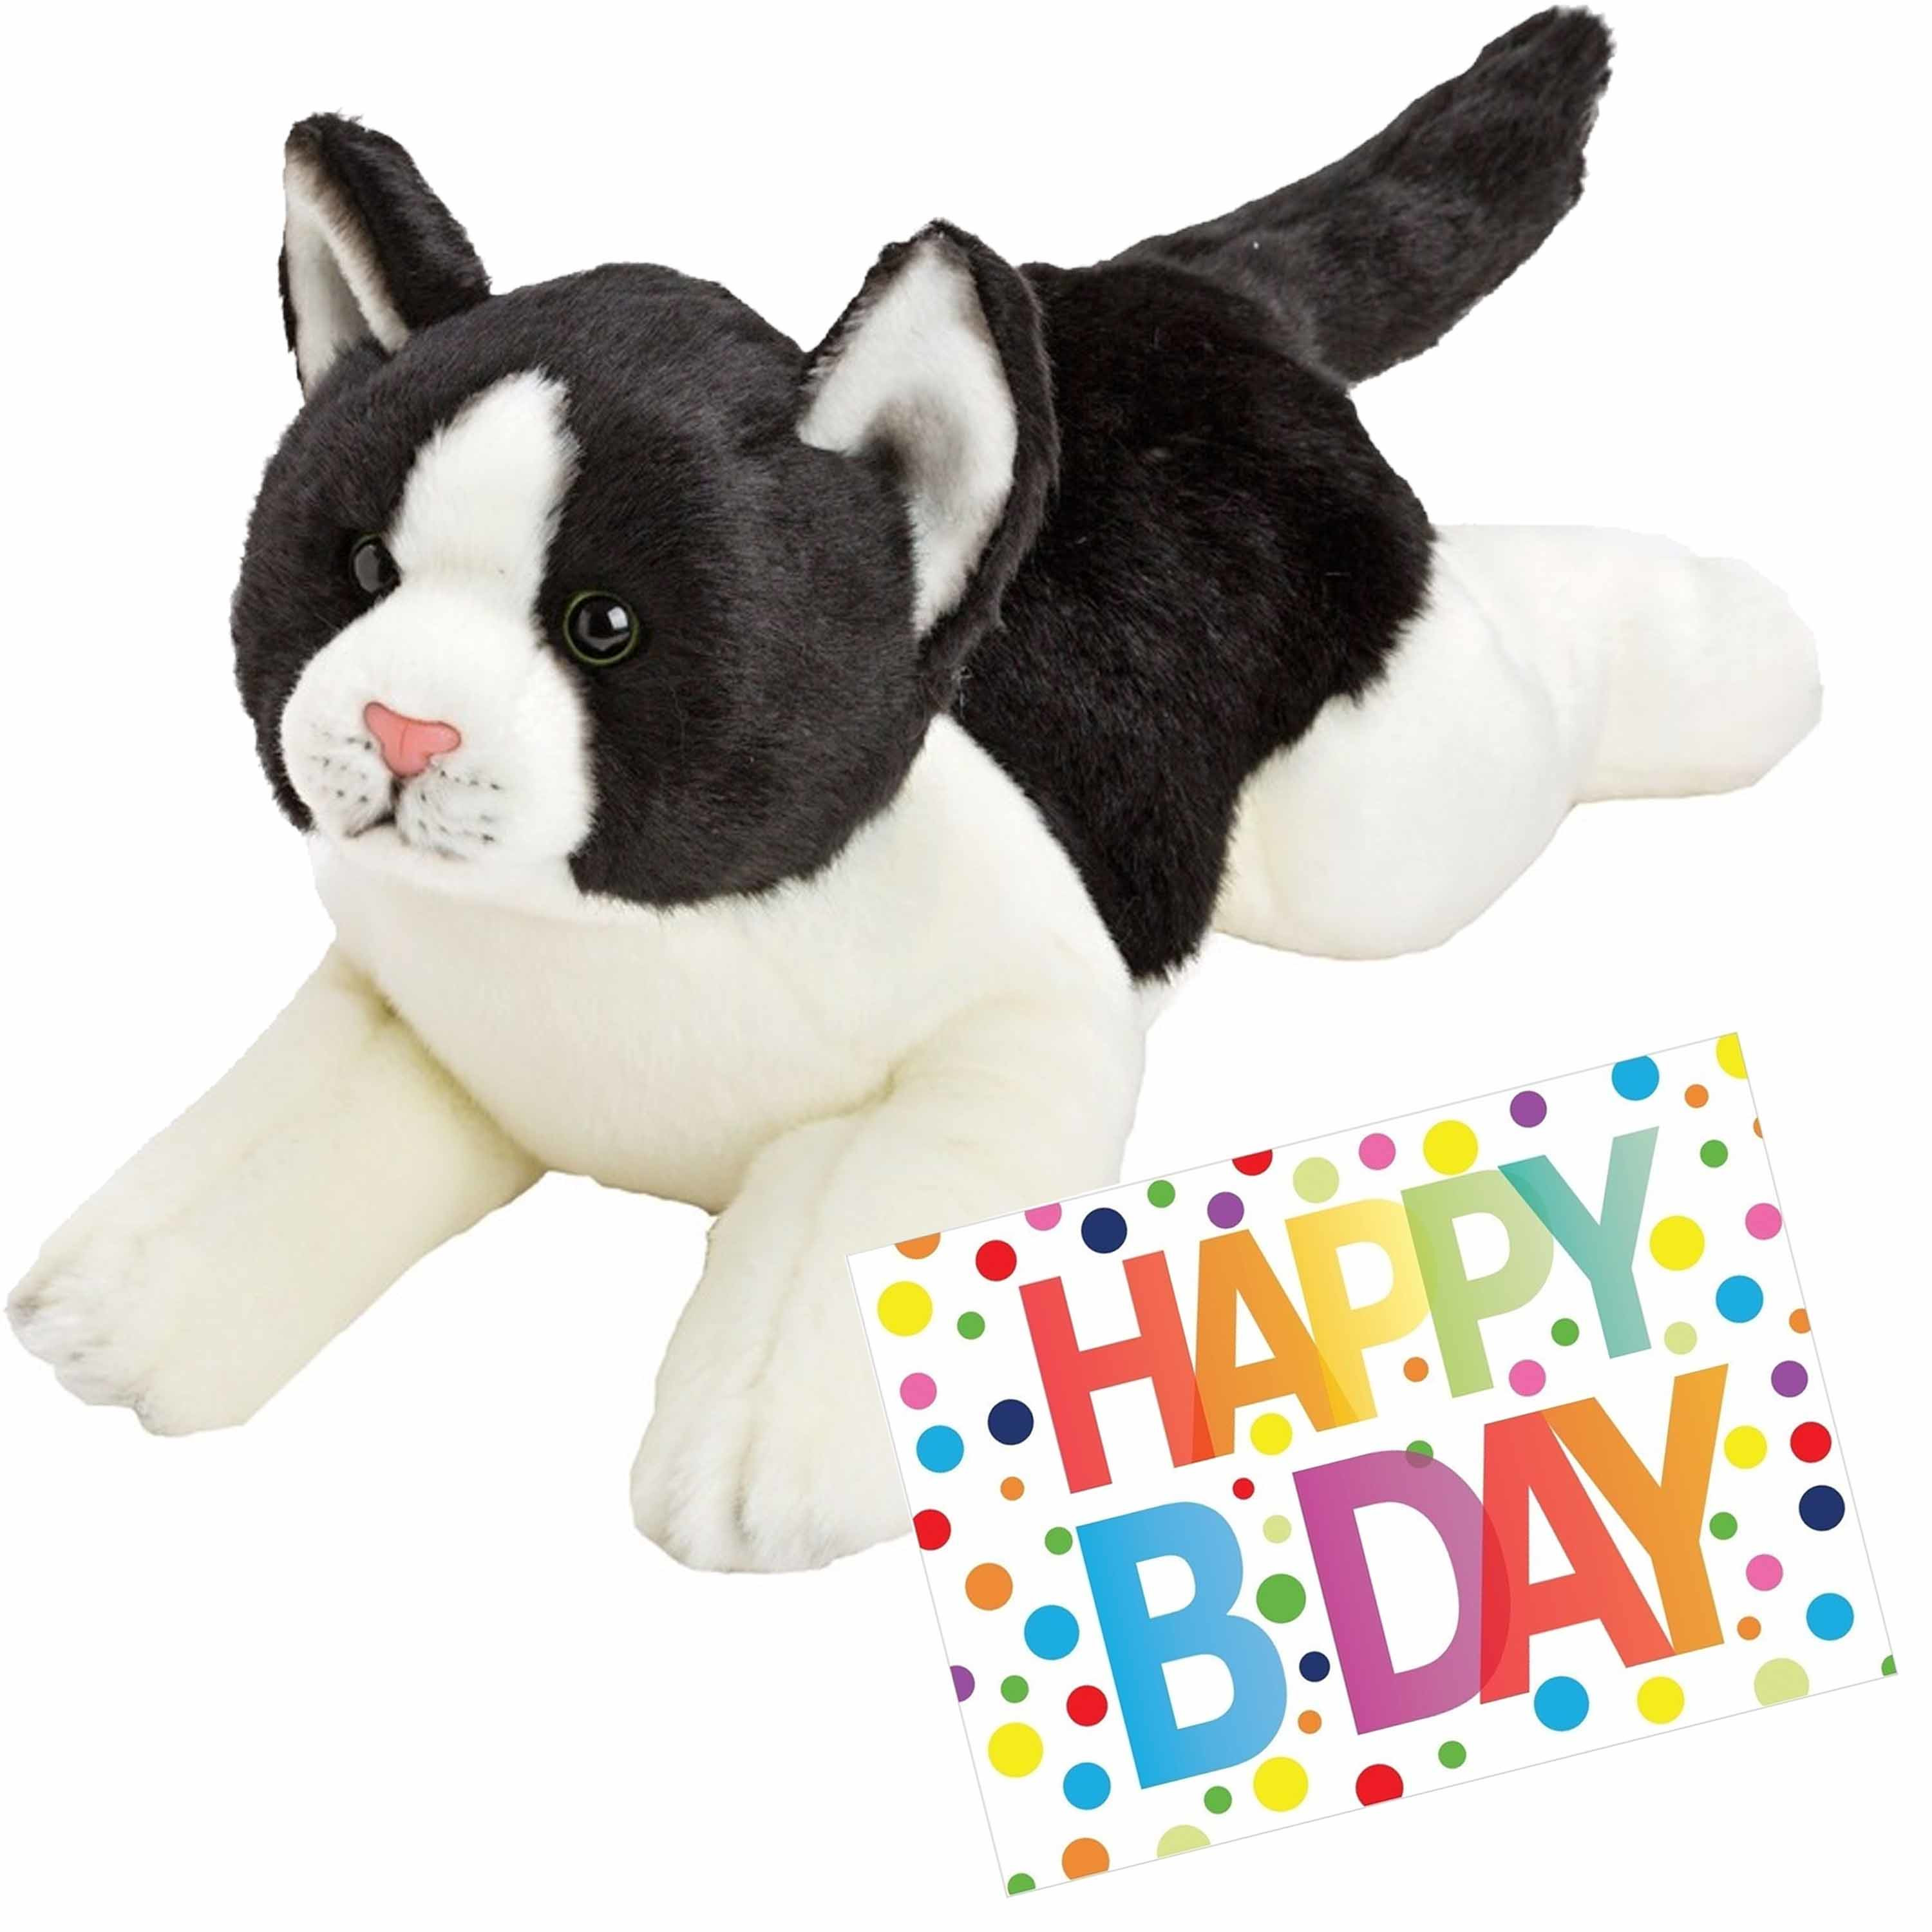 Pluche knuffel zwart-witte kat-poes 33 met A5-size Happy Birthday wenskaart